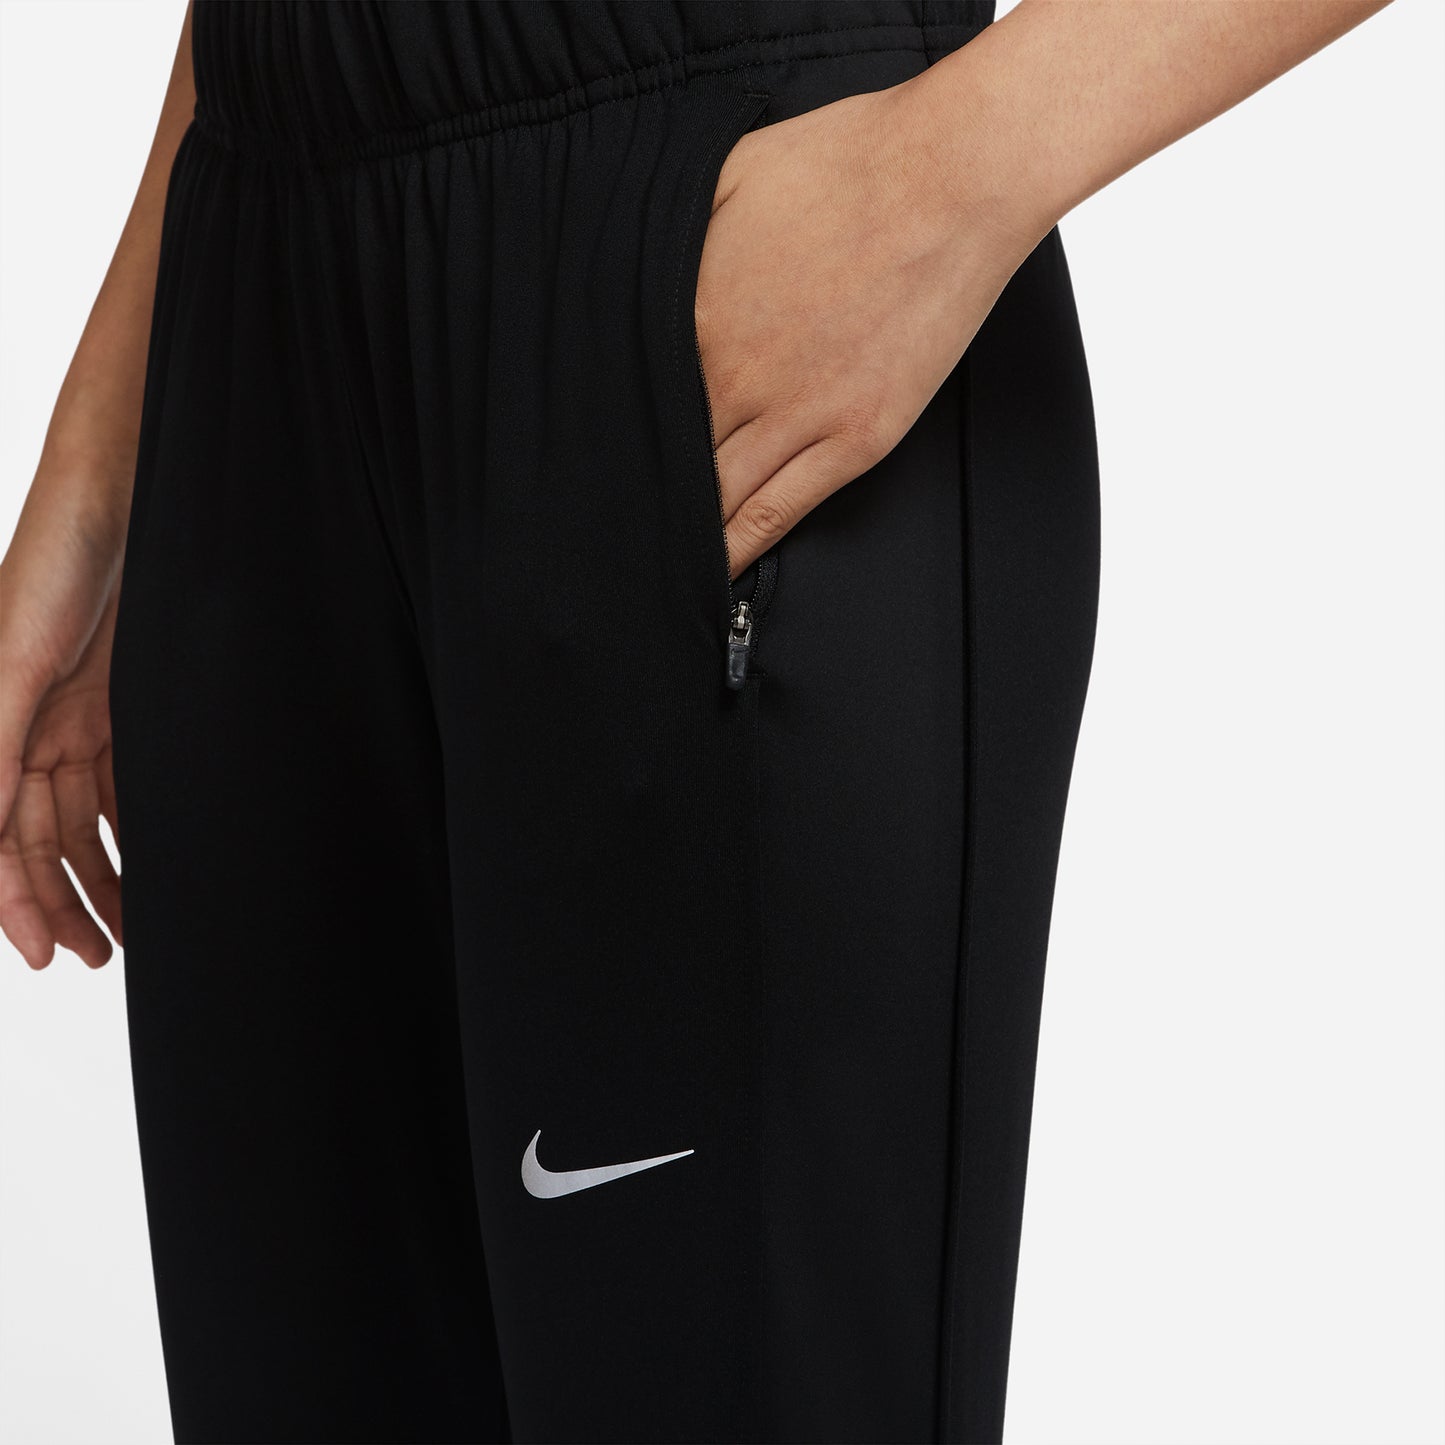 Nike swift pant 2 - black/reflective silver